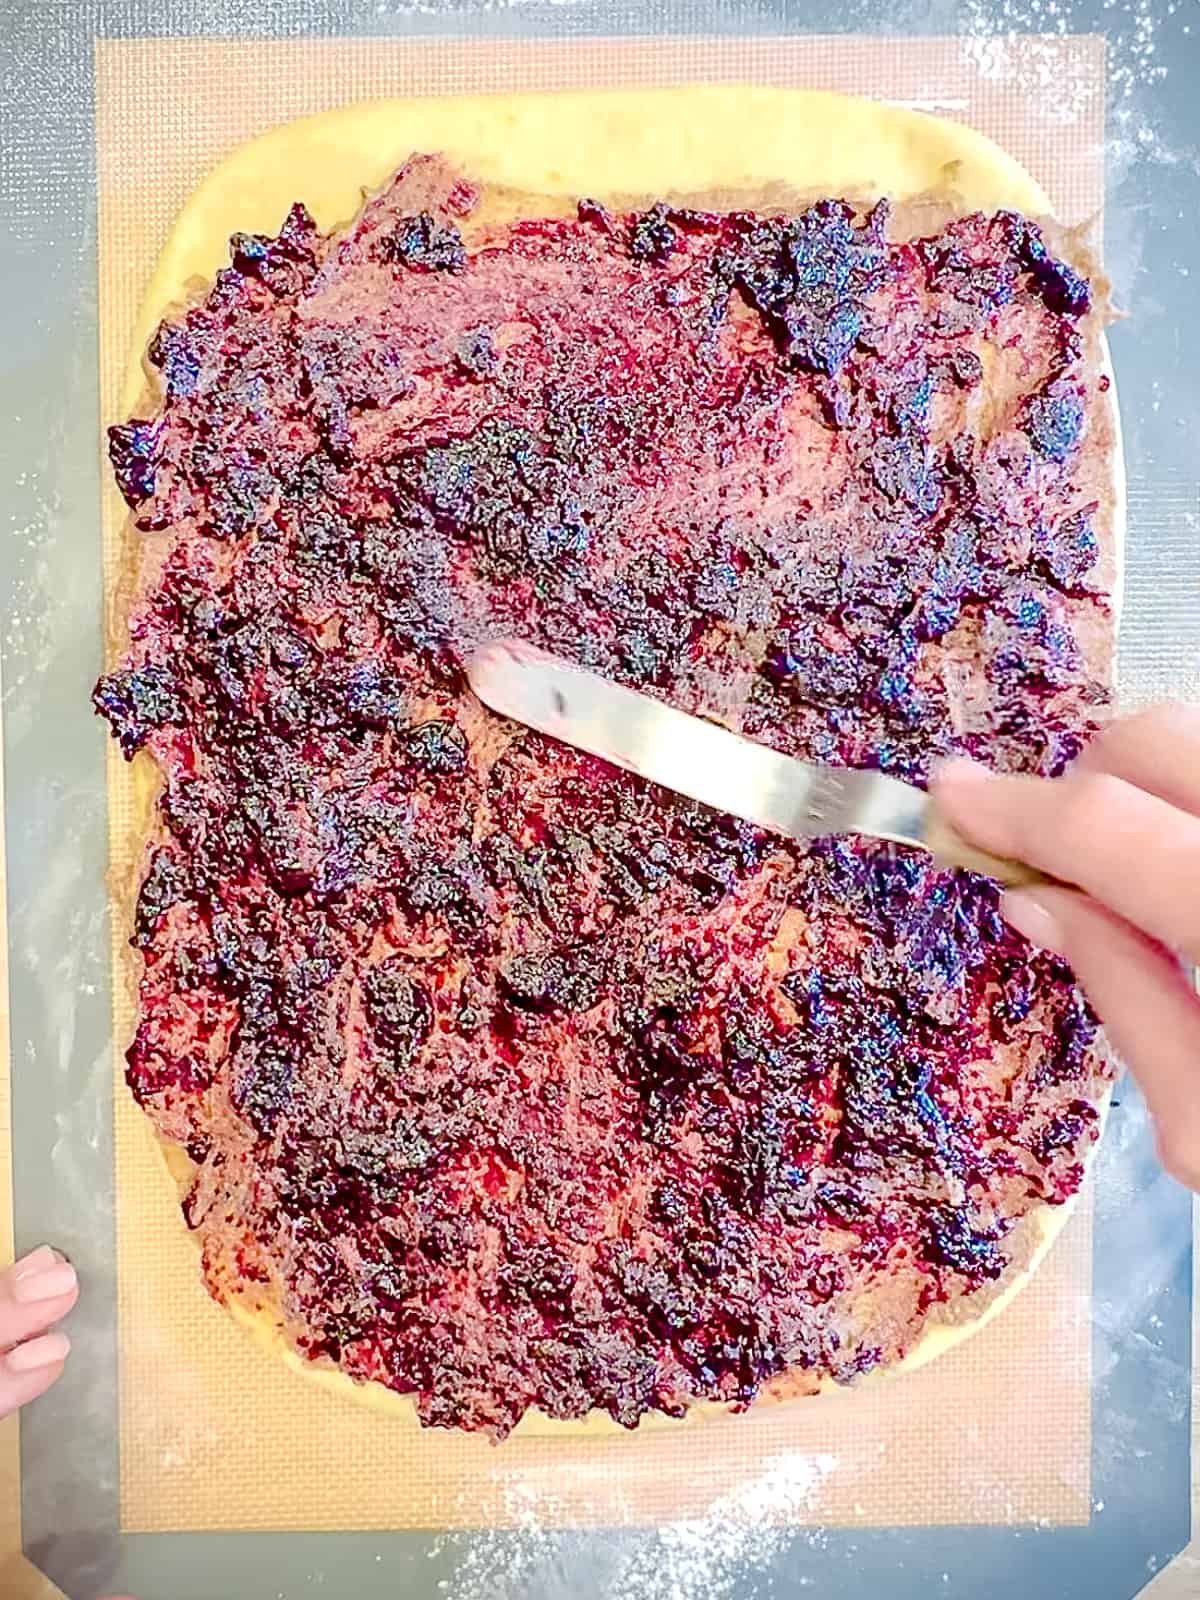 Spreading blueberry jam on top of cinnamon on blueberry cinnamon roll dough.